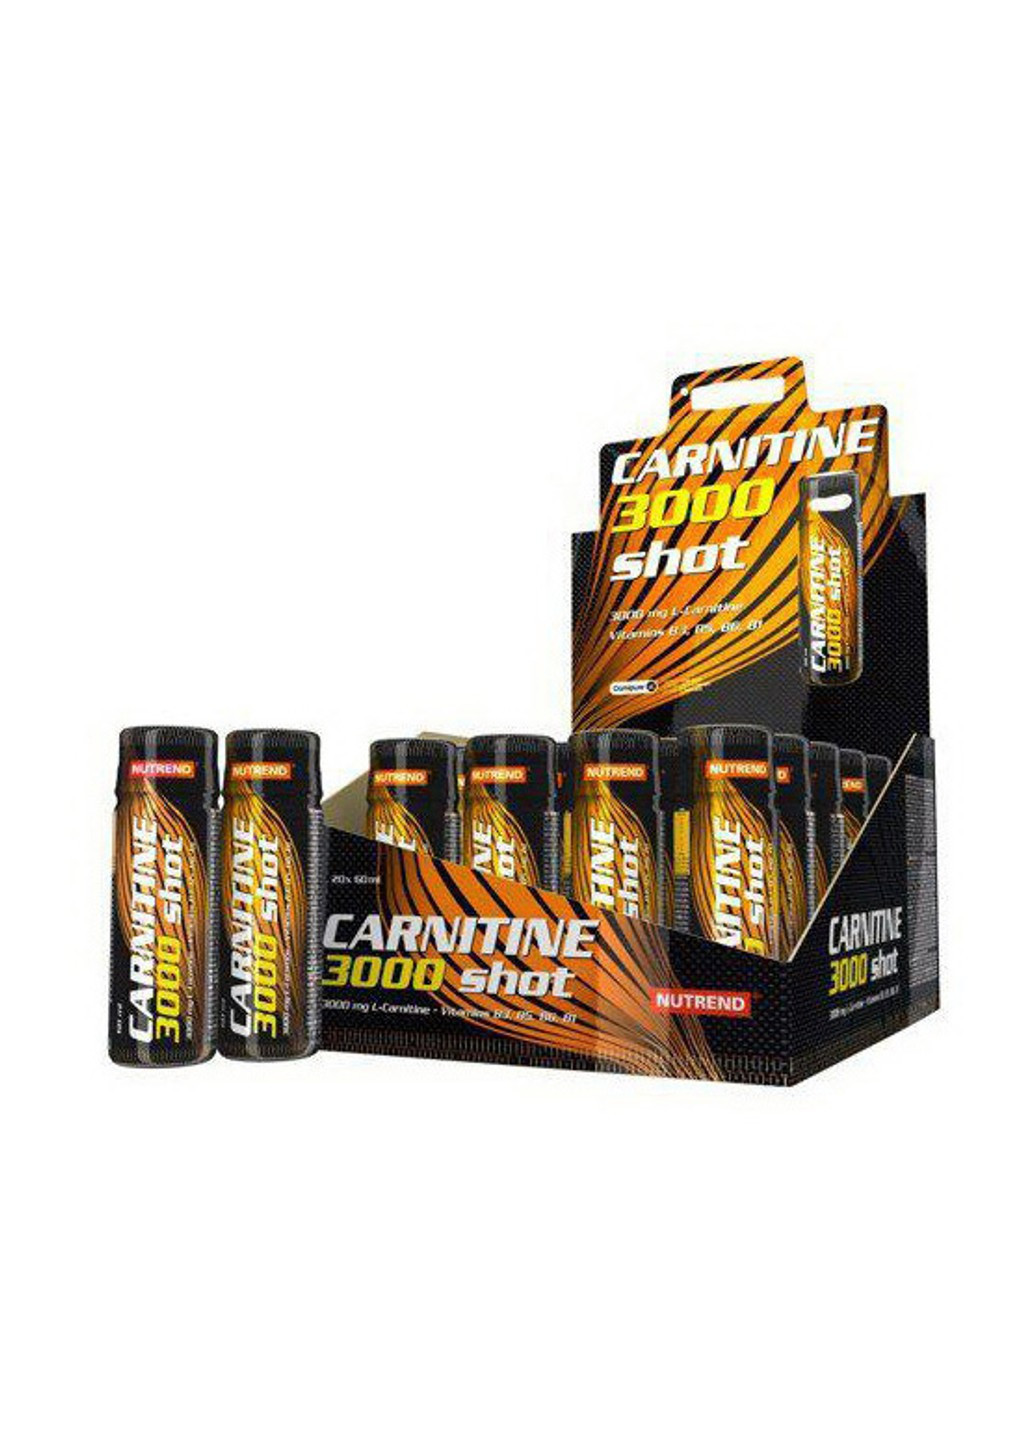 Л-карнитин Carnitine 3000 Shot 20 х 60 мл Апельсин Nutrend (255362565)